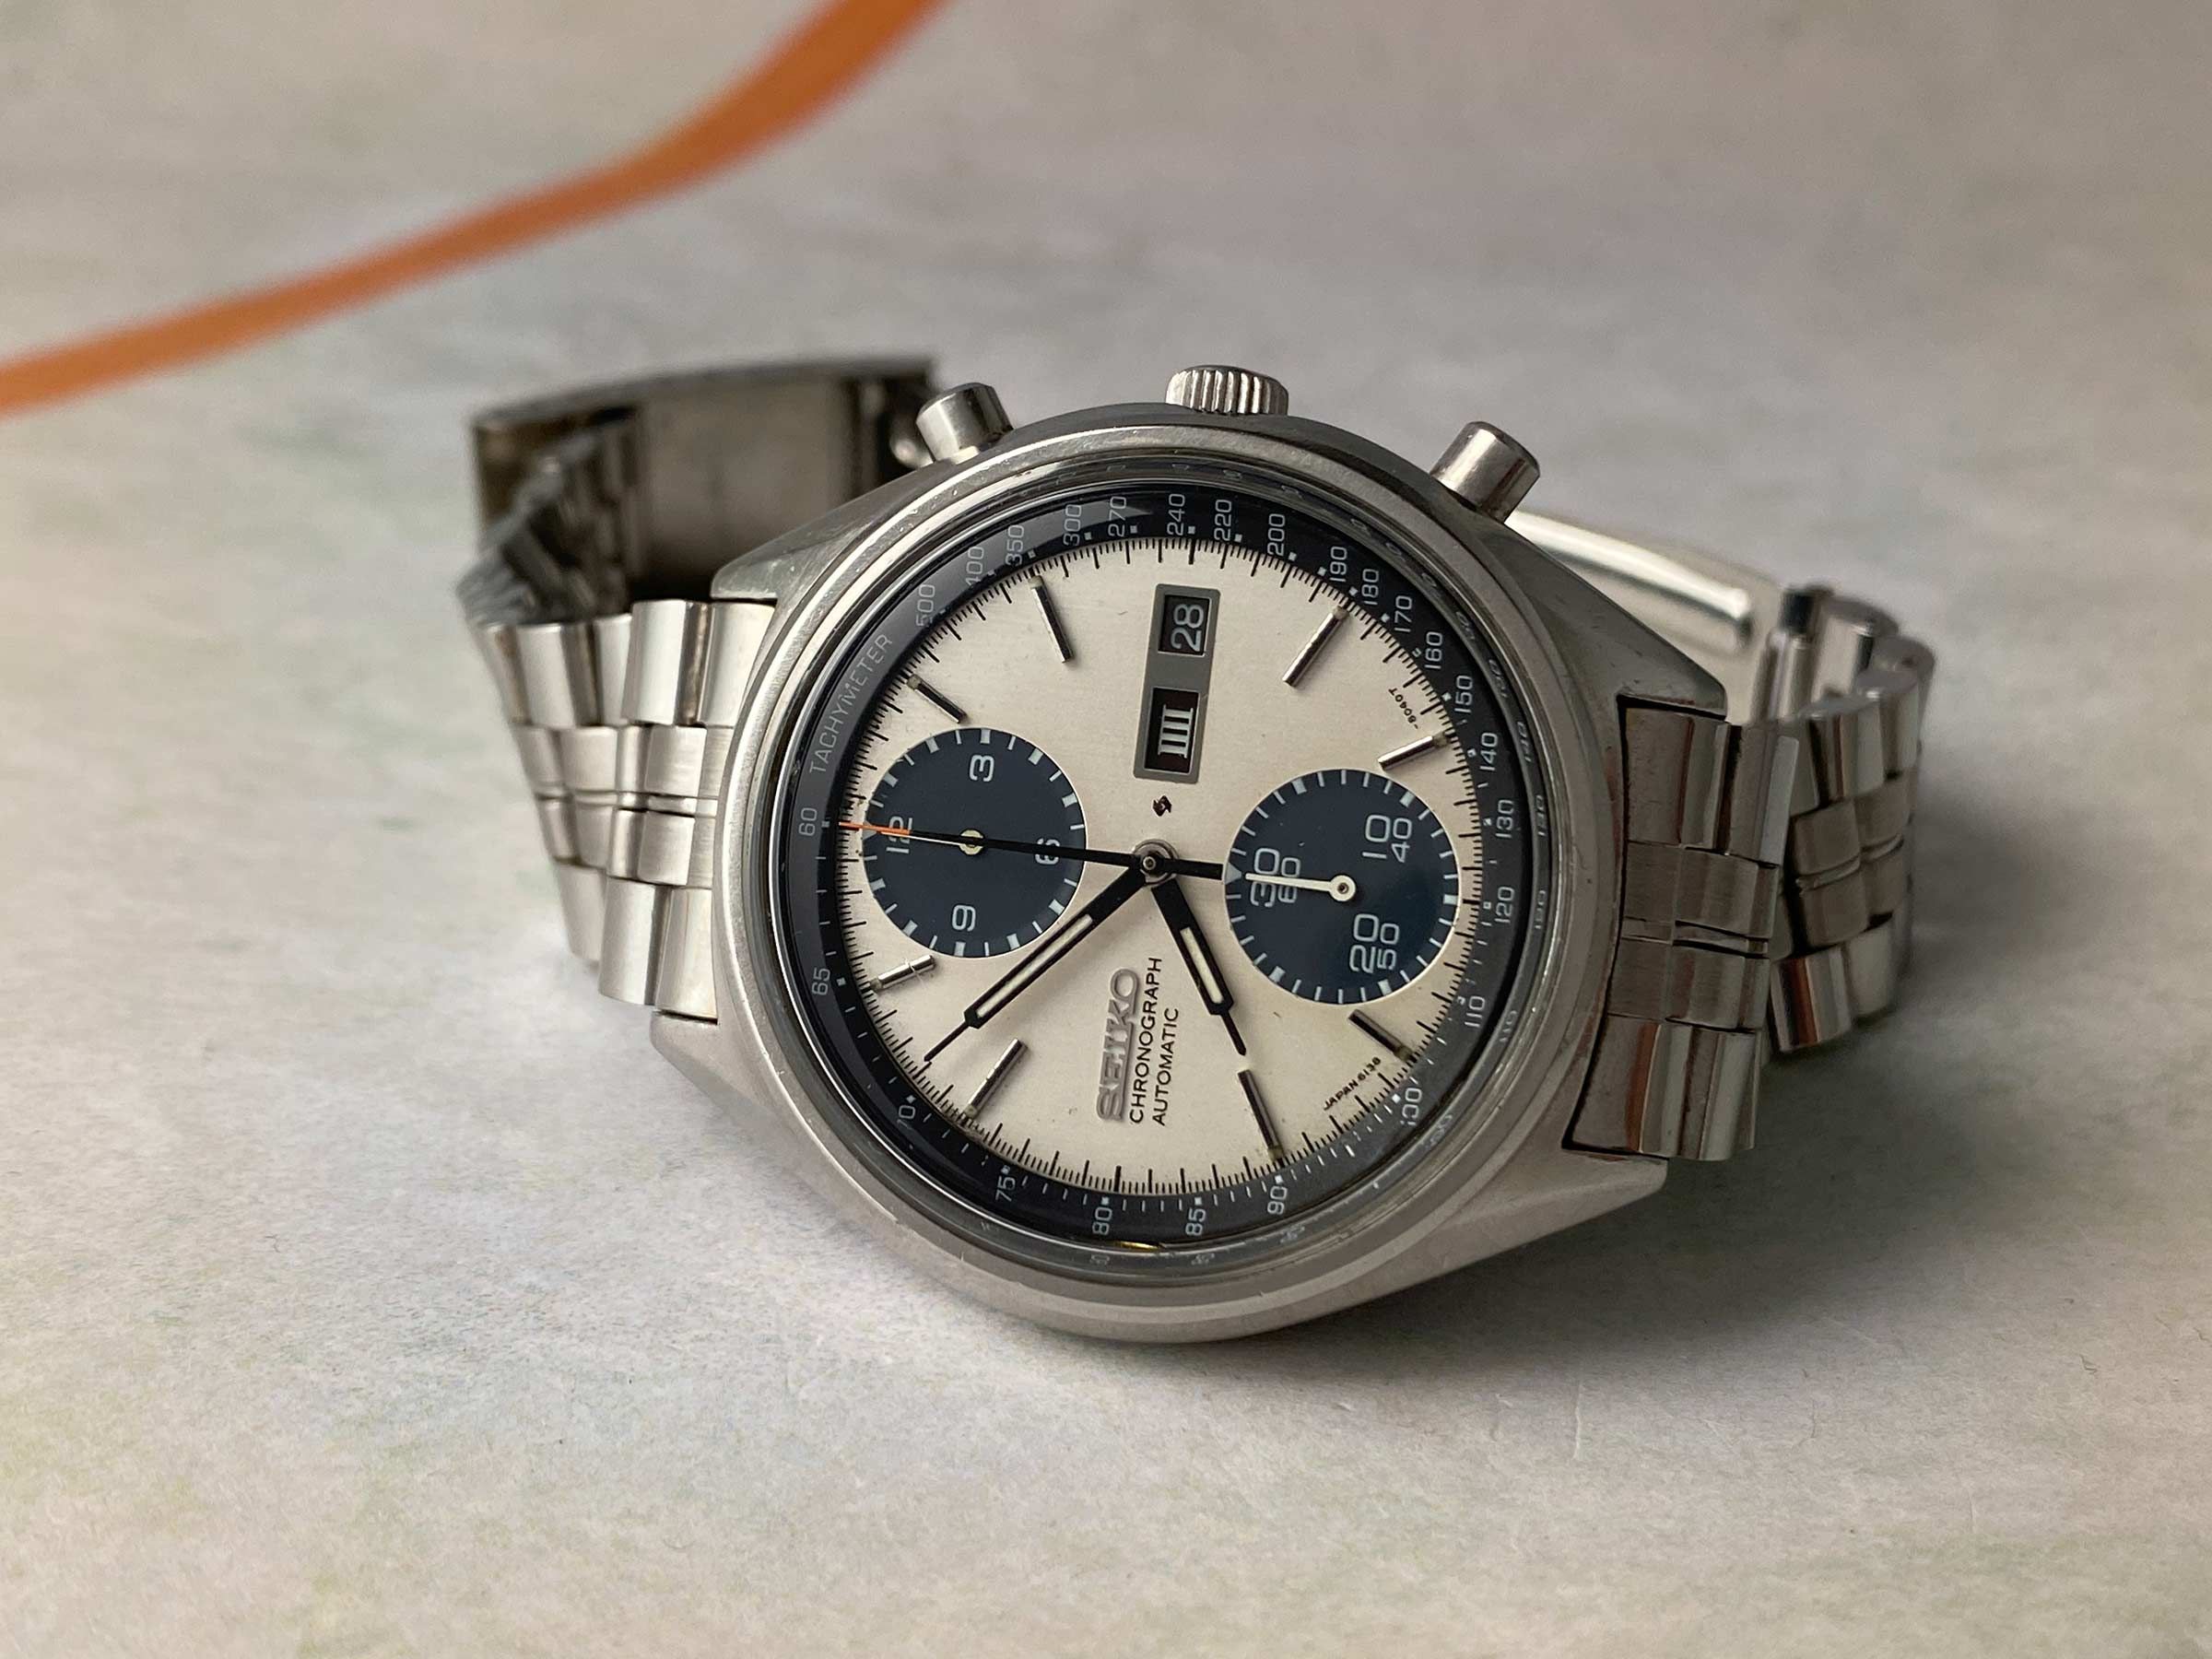 SEIKO PANDA Vintage automatic chronograph watch 1977 Cal. 6138B Ref. 6138- 8020 ALL ORIGINAL *** SPECTACULAR CONDITION *** Seiko Vintage watches -  Watches83